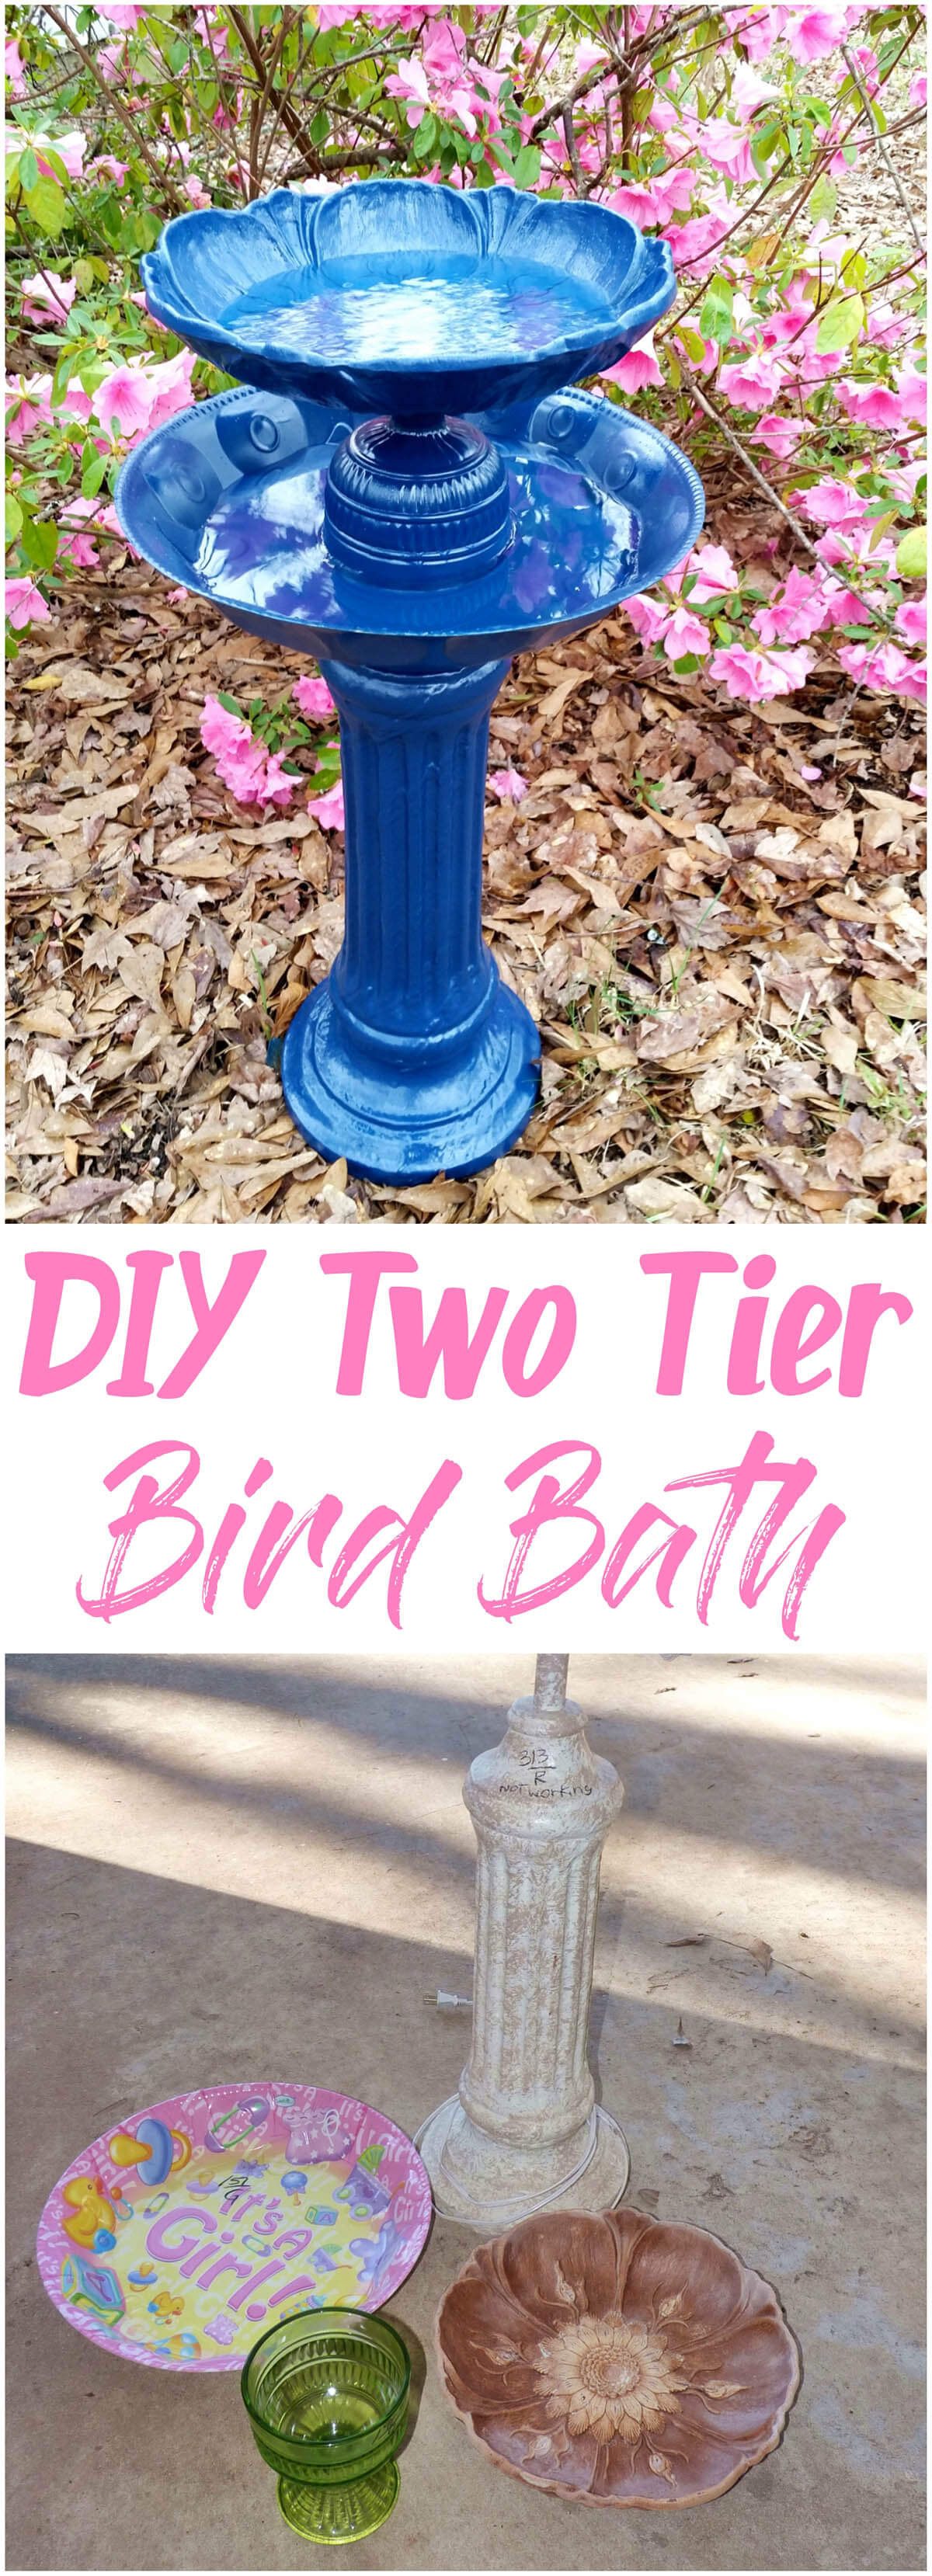 Best ideas about Bird Bath DIY
. Save or Pin 24 Best DIY Bird Bath Ideas and Designs for 2019 Now.